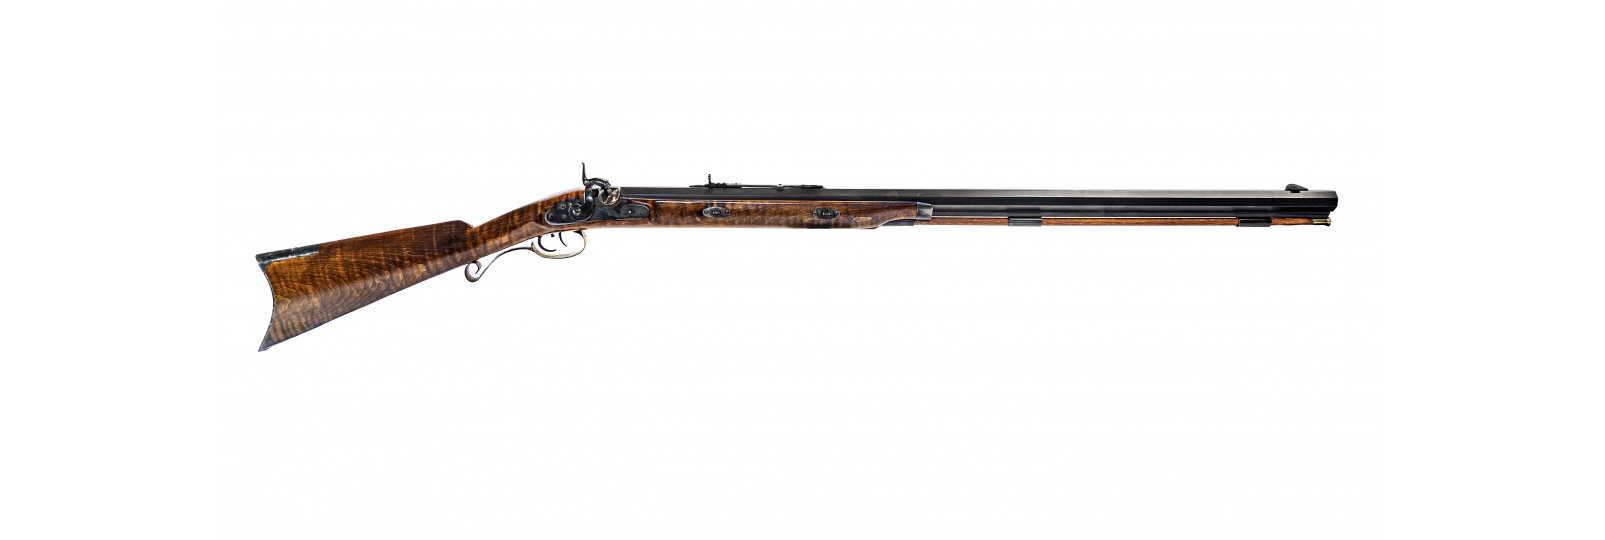 Rocky Mountain Hawken "Maple" Rifle